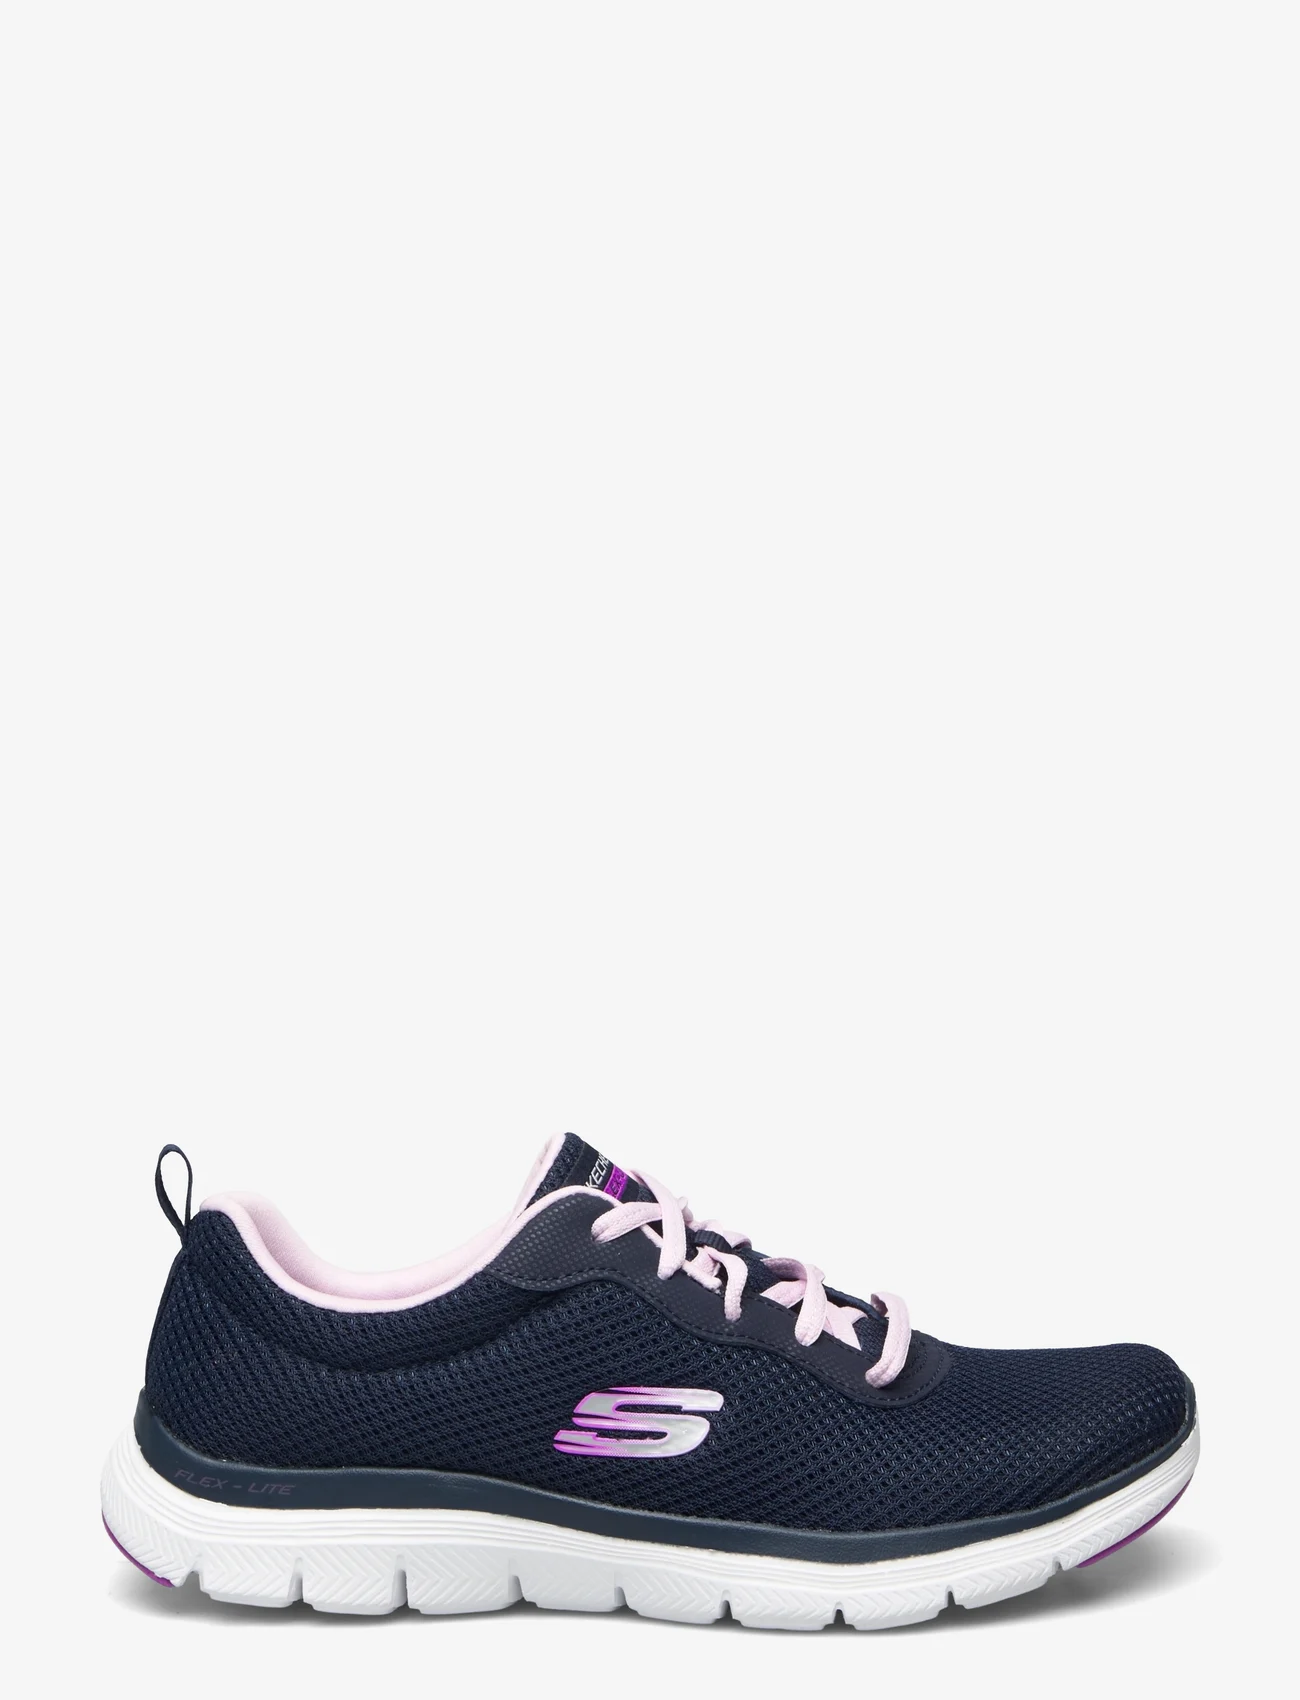 Skechers - Womens Flex Appeal 4.0 - Brilliant View - låga sneakers - nvlv navy lavender - 1